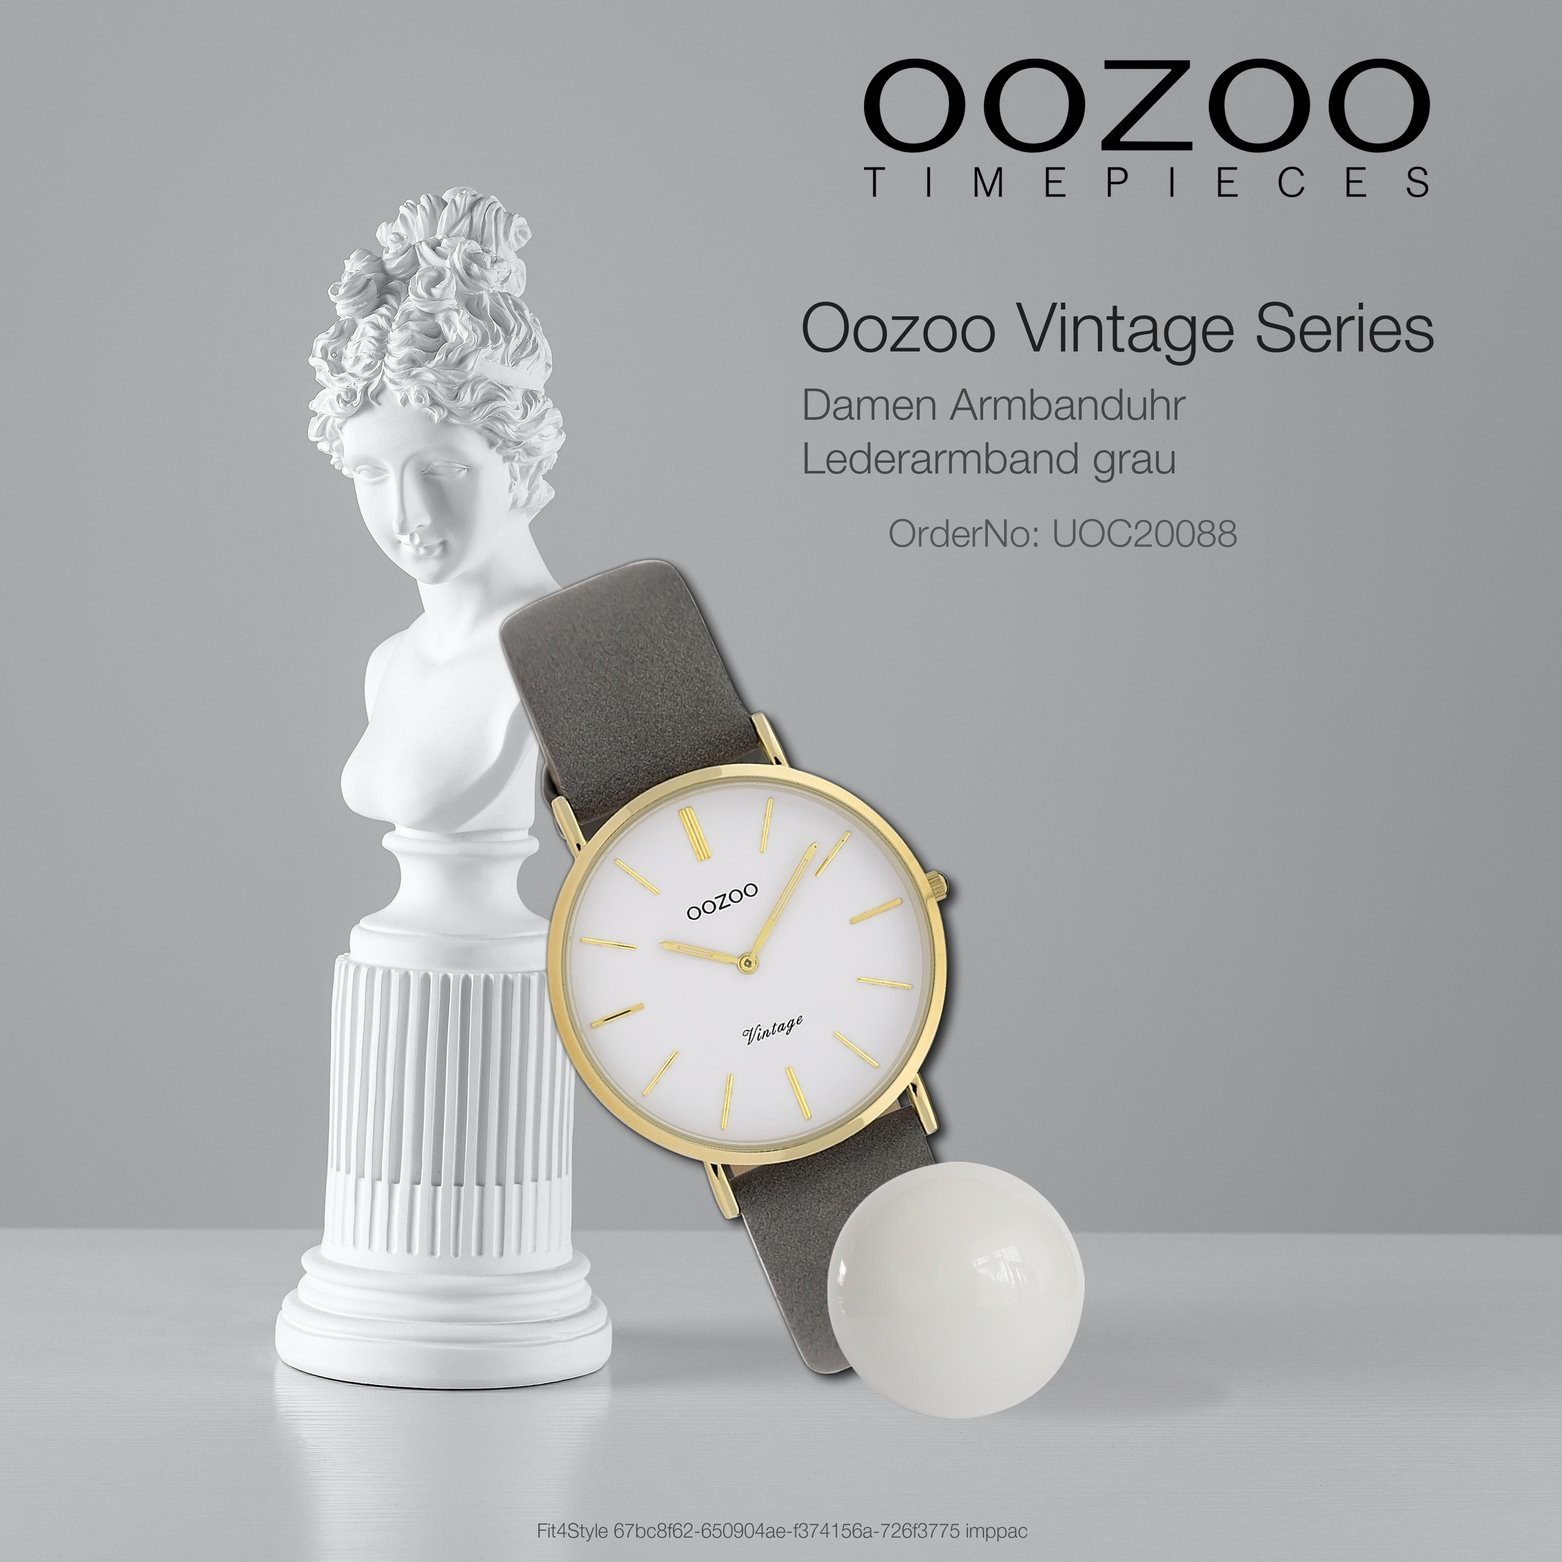 (ca. 32mm) OOZOO Oozoo Damen mittel Damenuhr Armbanduhr Quarzuhr rund, Vintage, OOZOO Fashion-Style Lederarmband,